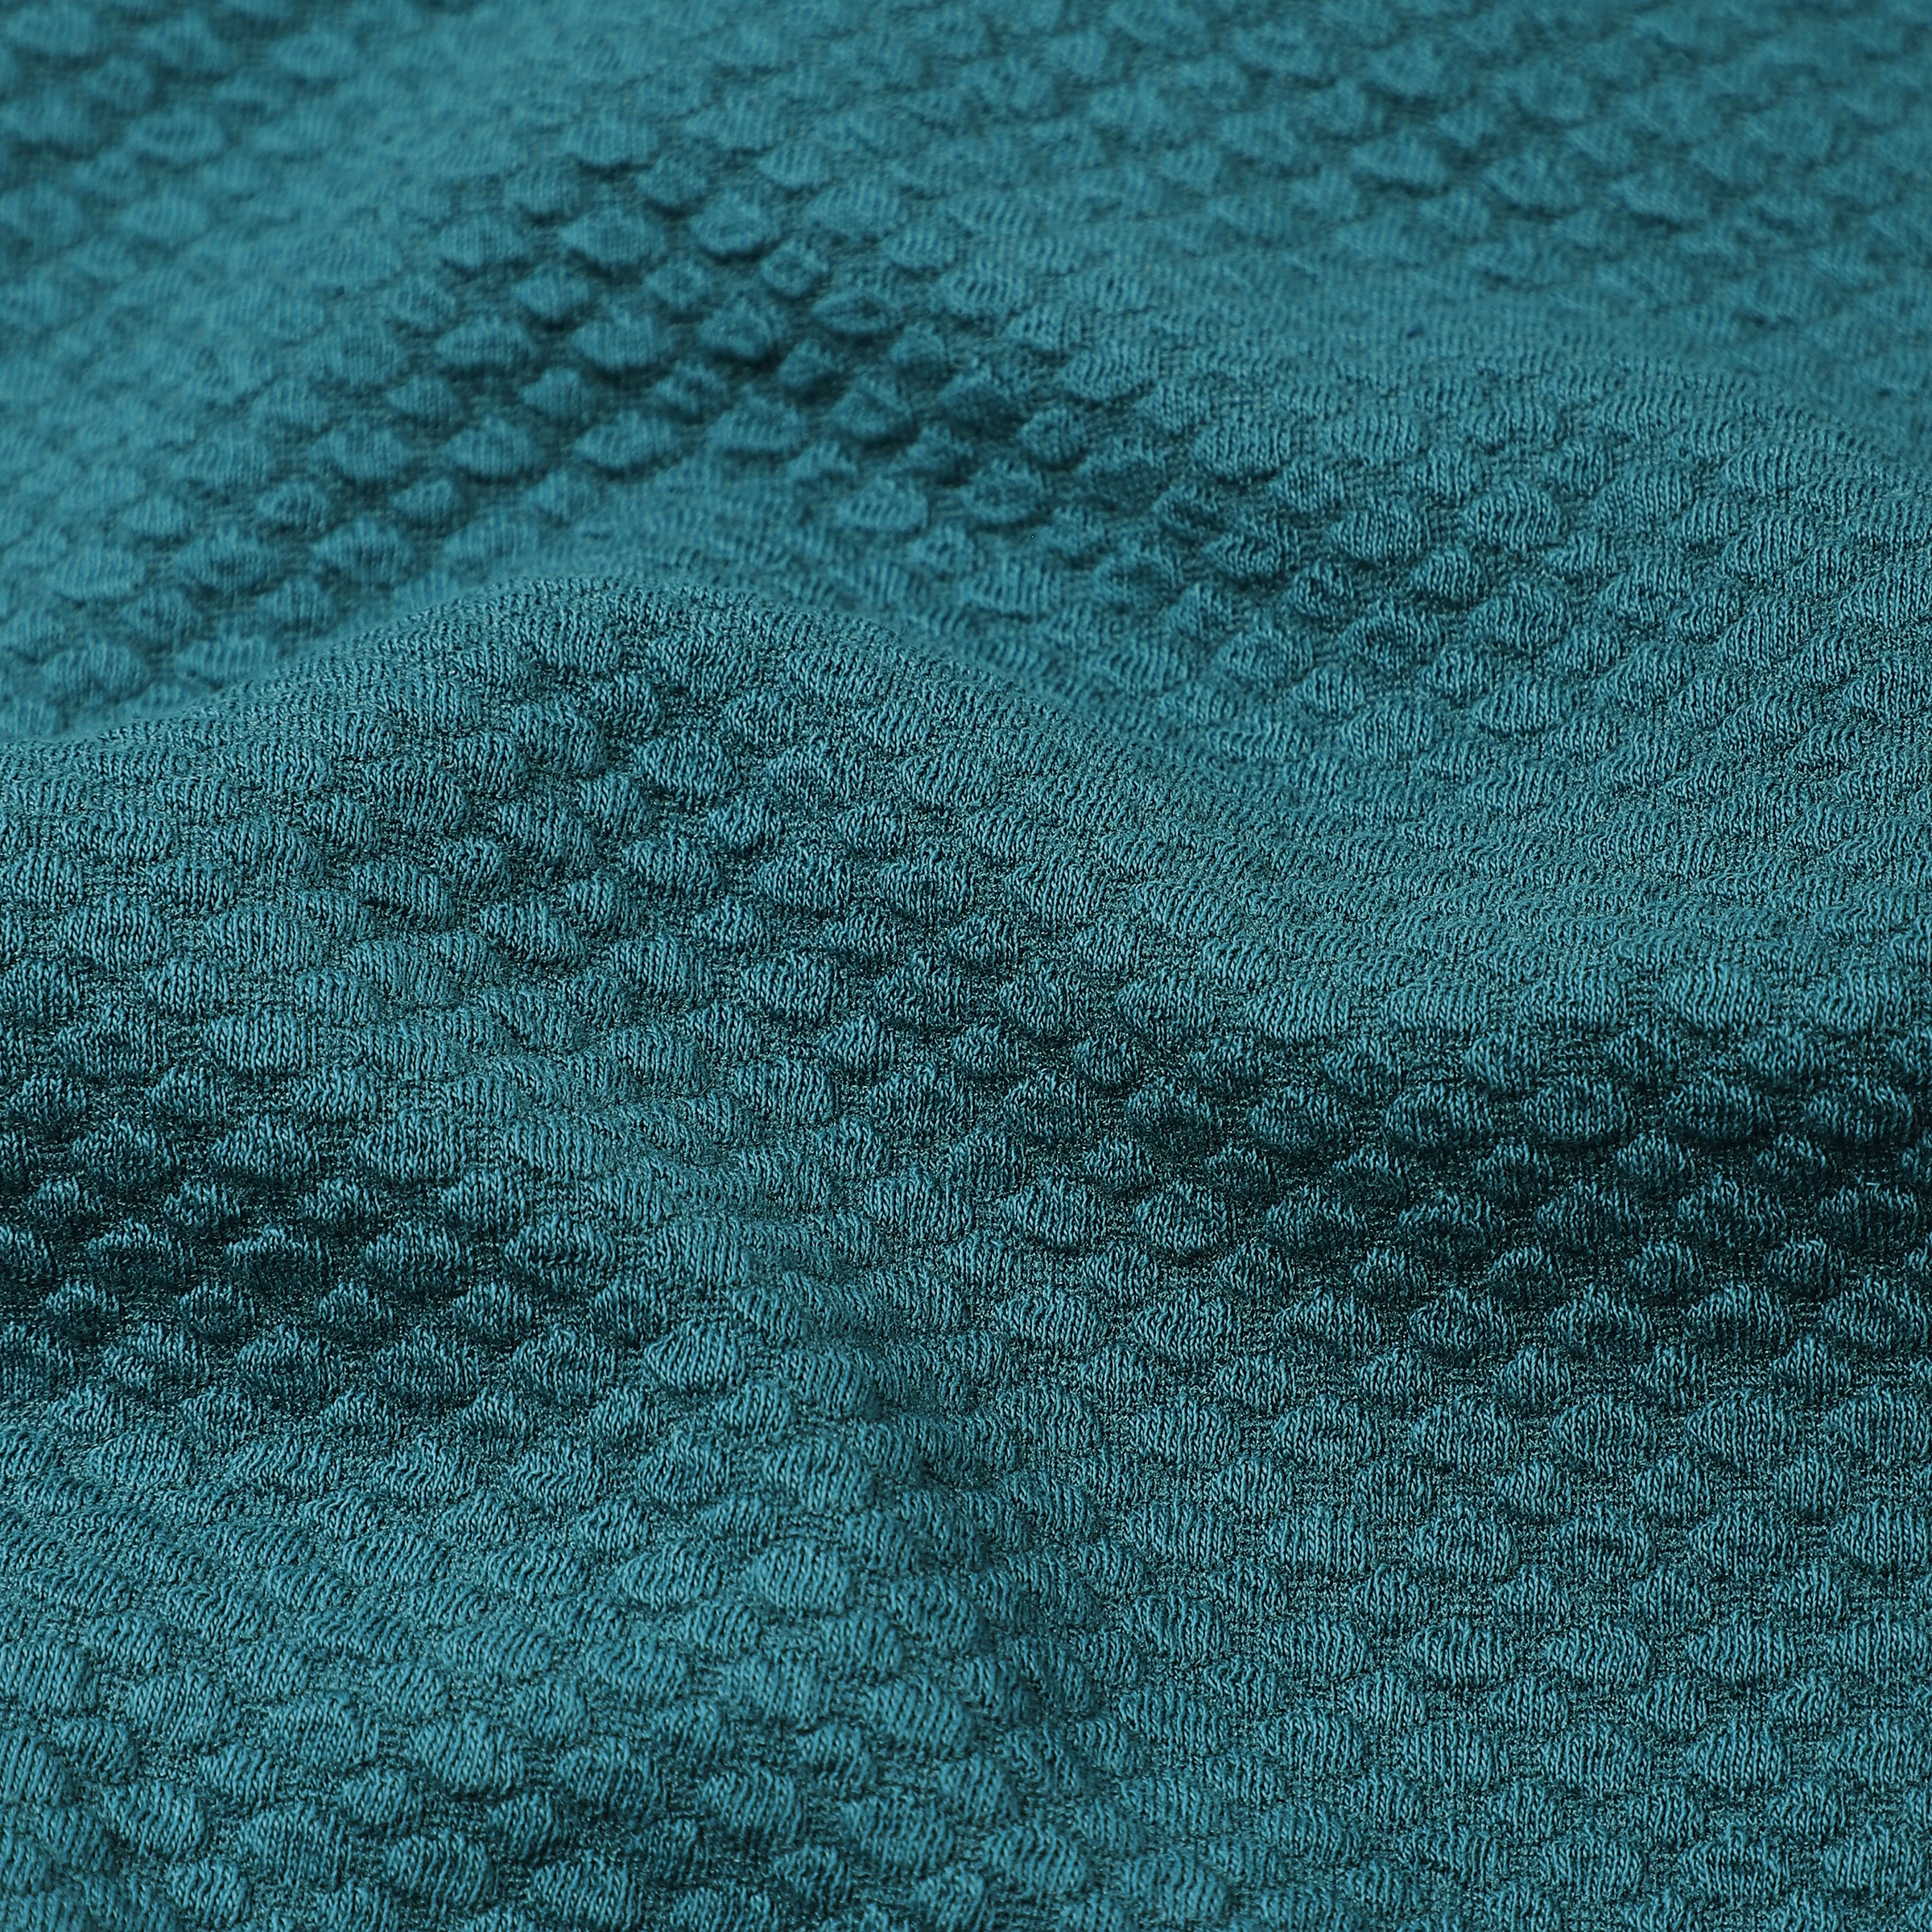 Roam Hoodie Dark Teal close up of fabric